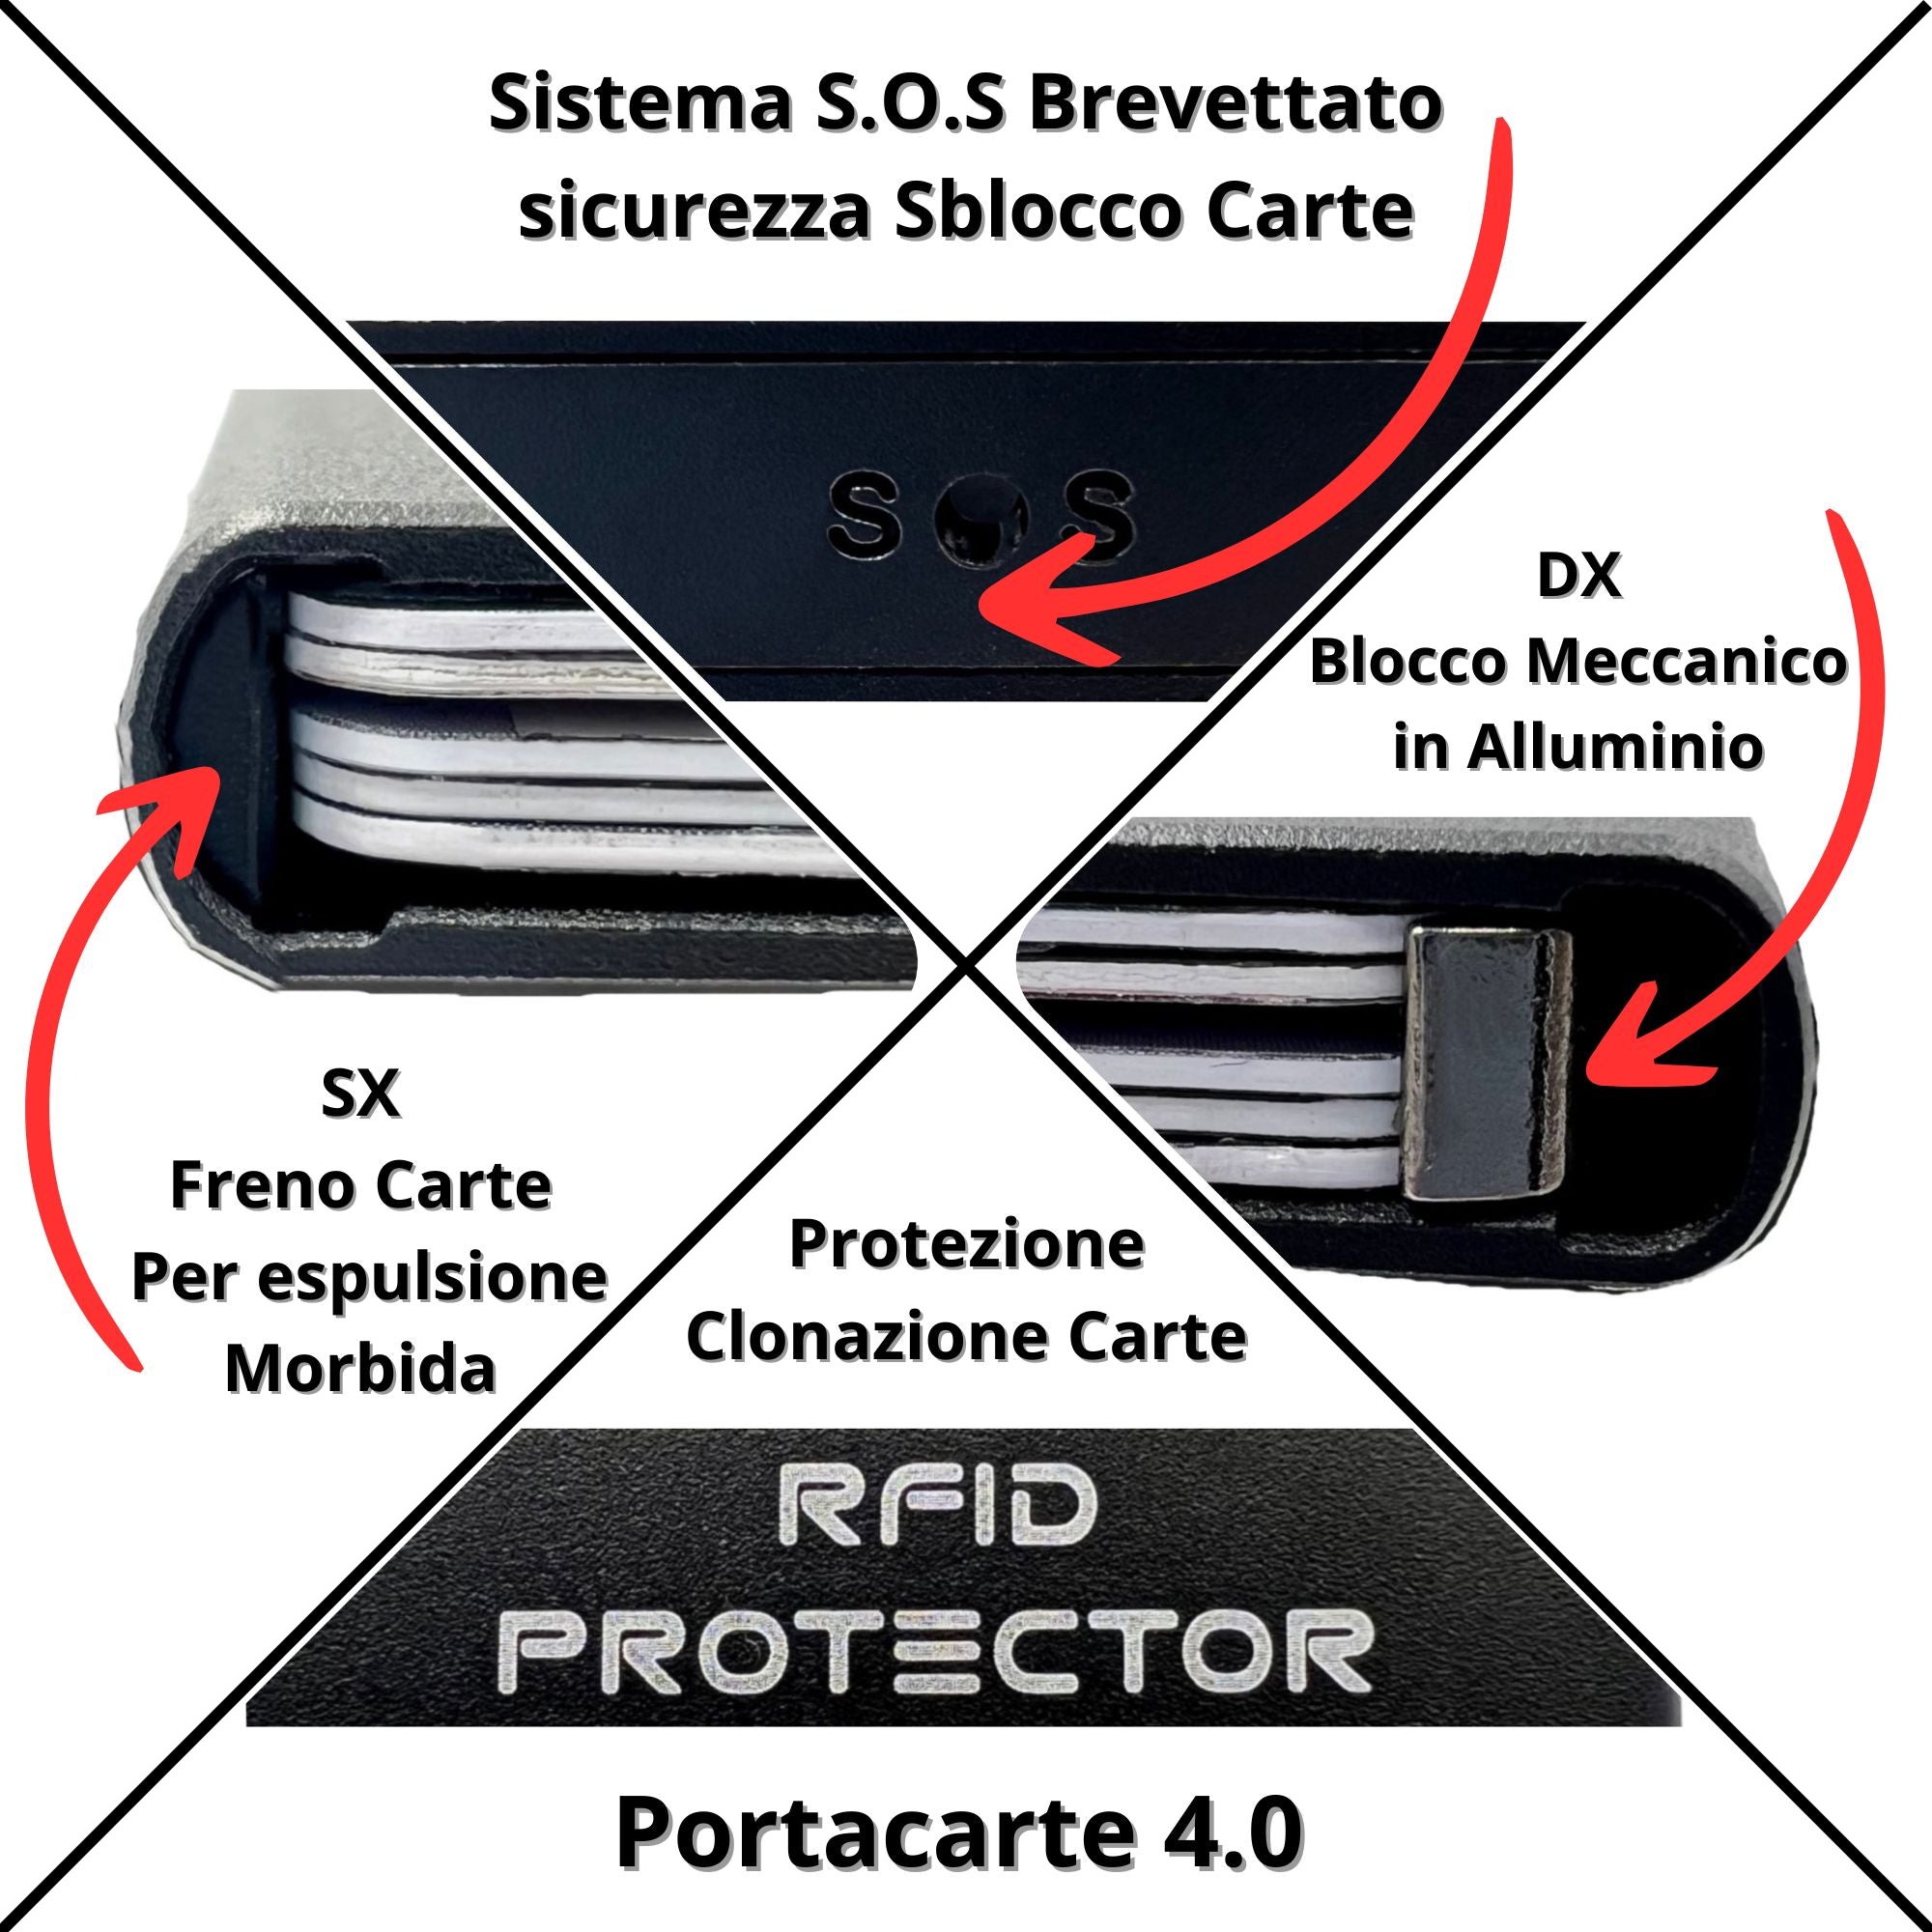 New CardHolder 4.0 Black con biadesivo TESA